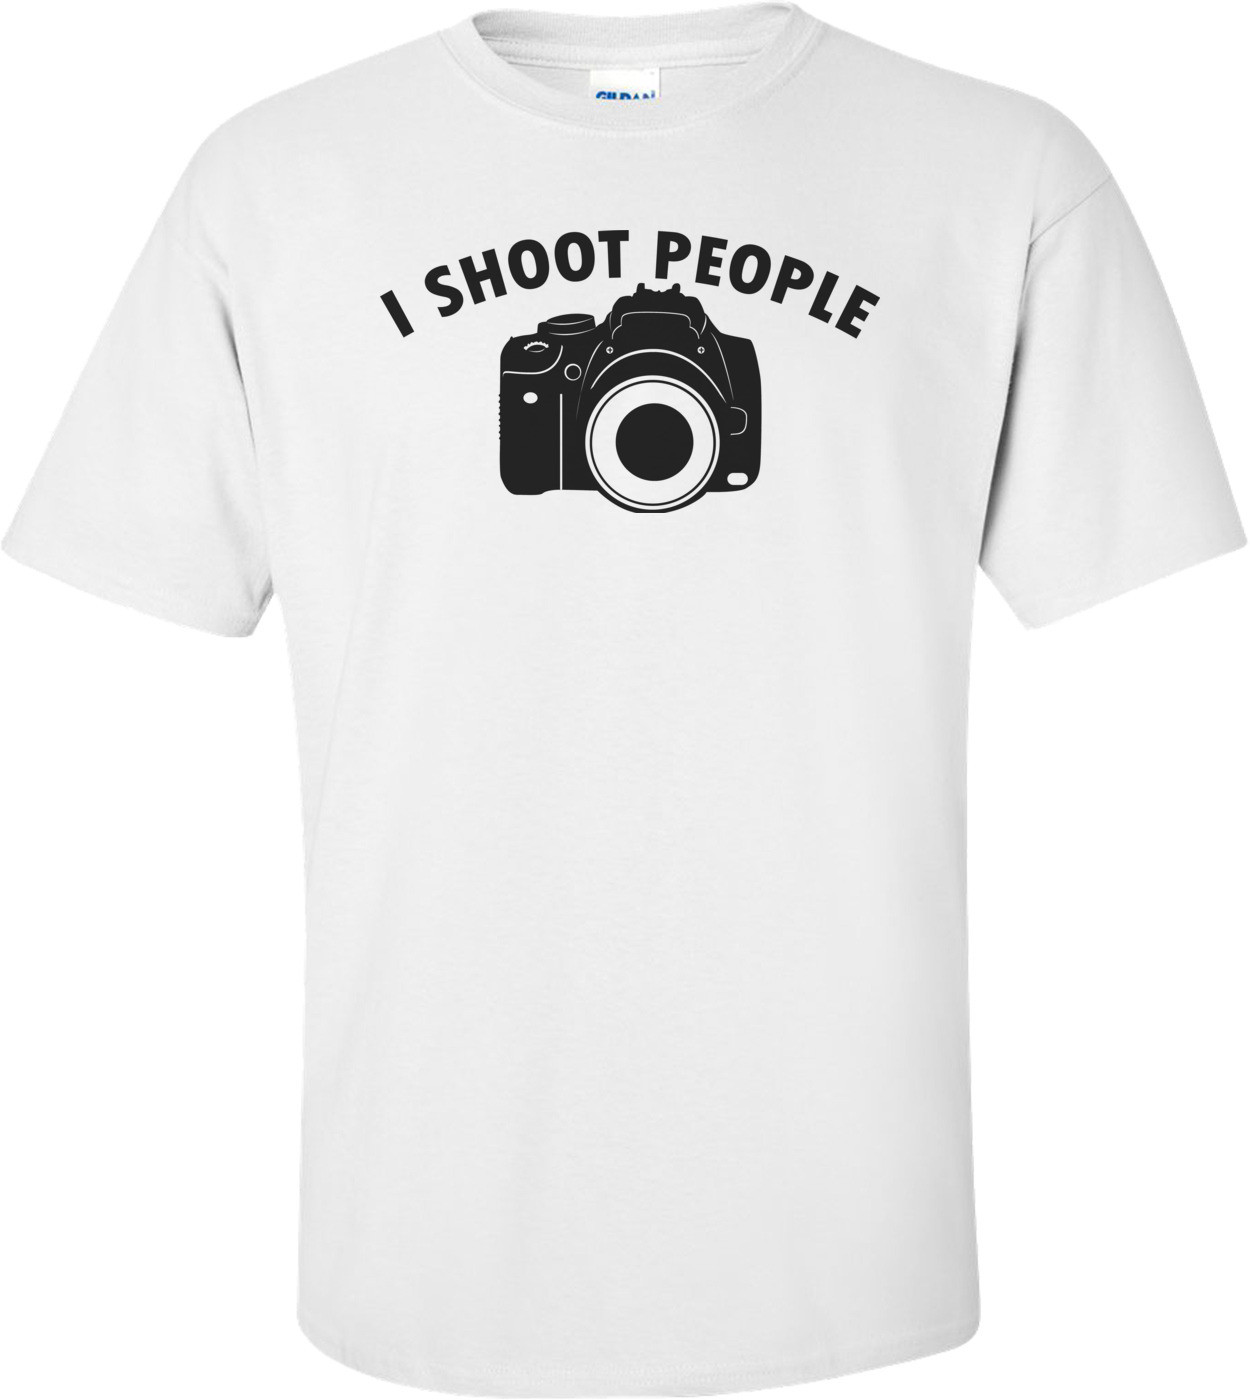 I Shoot People Funny Shirt